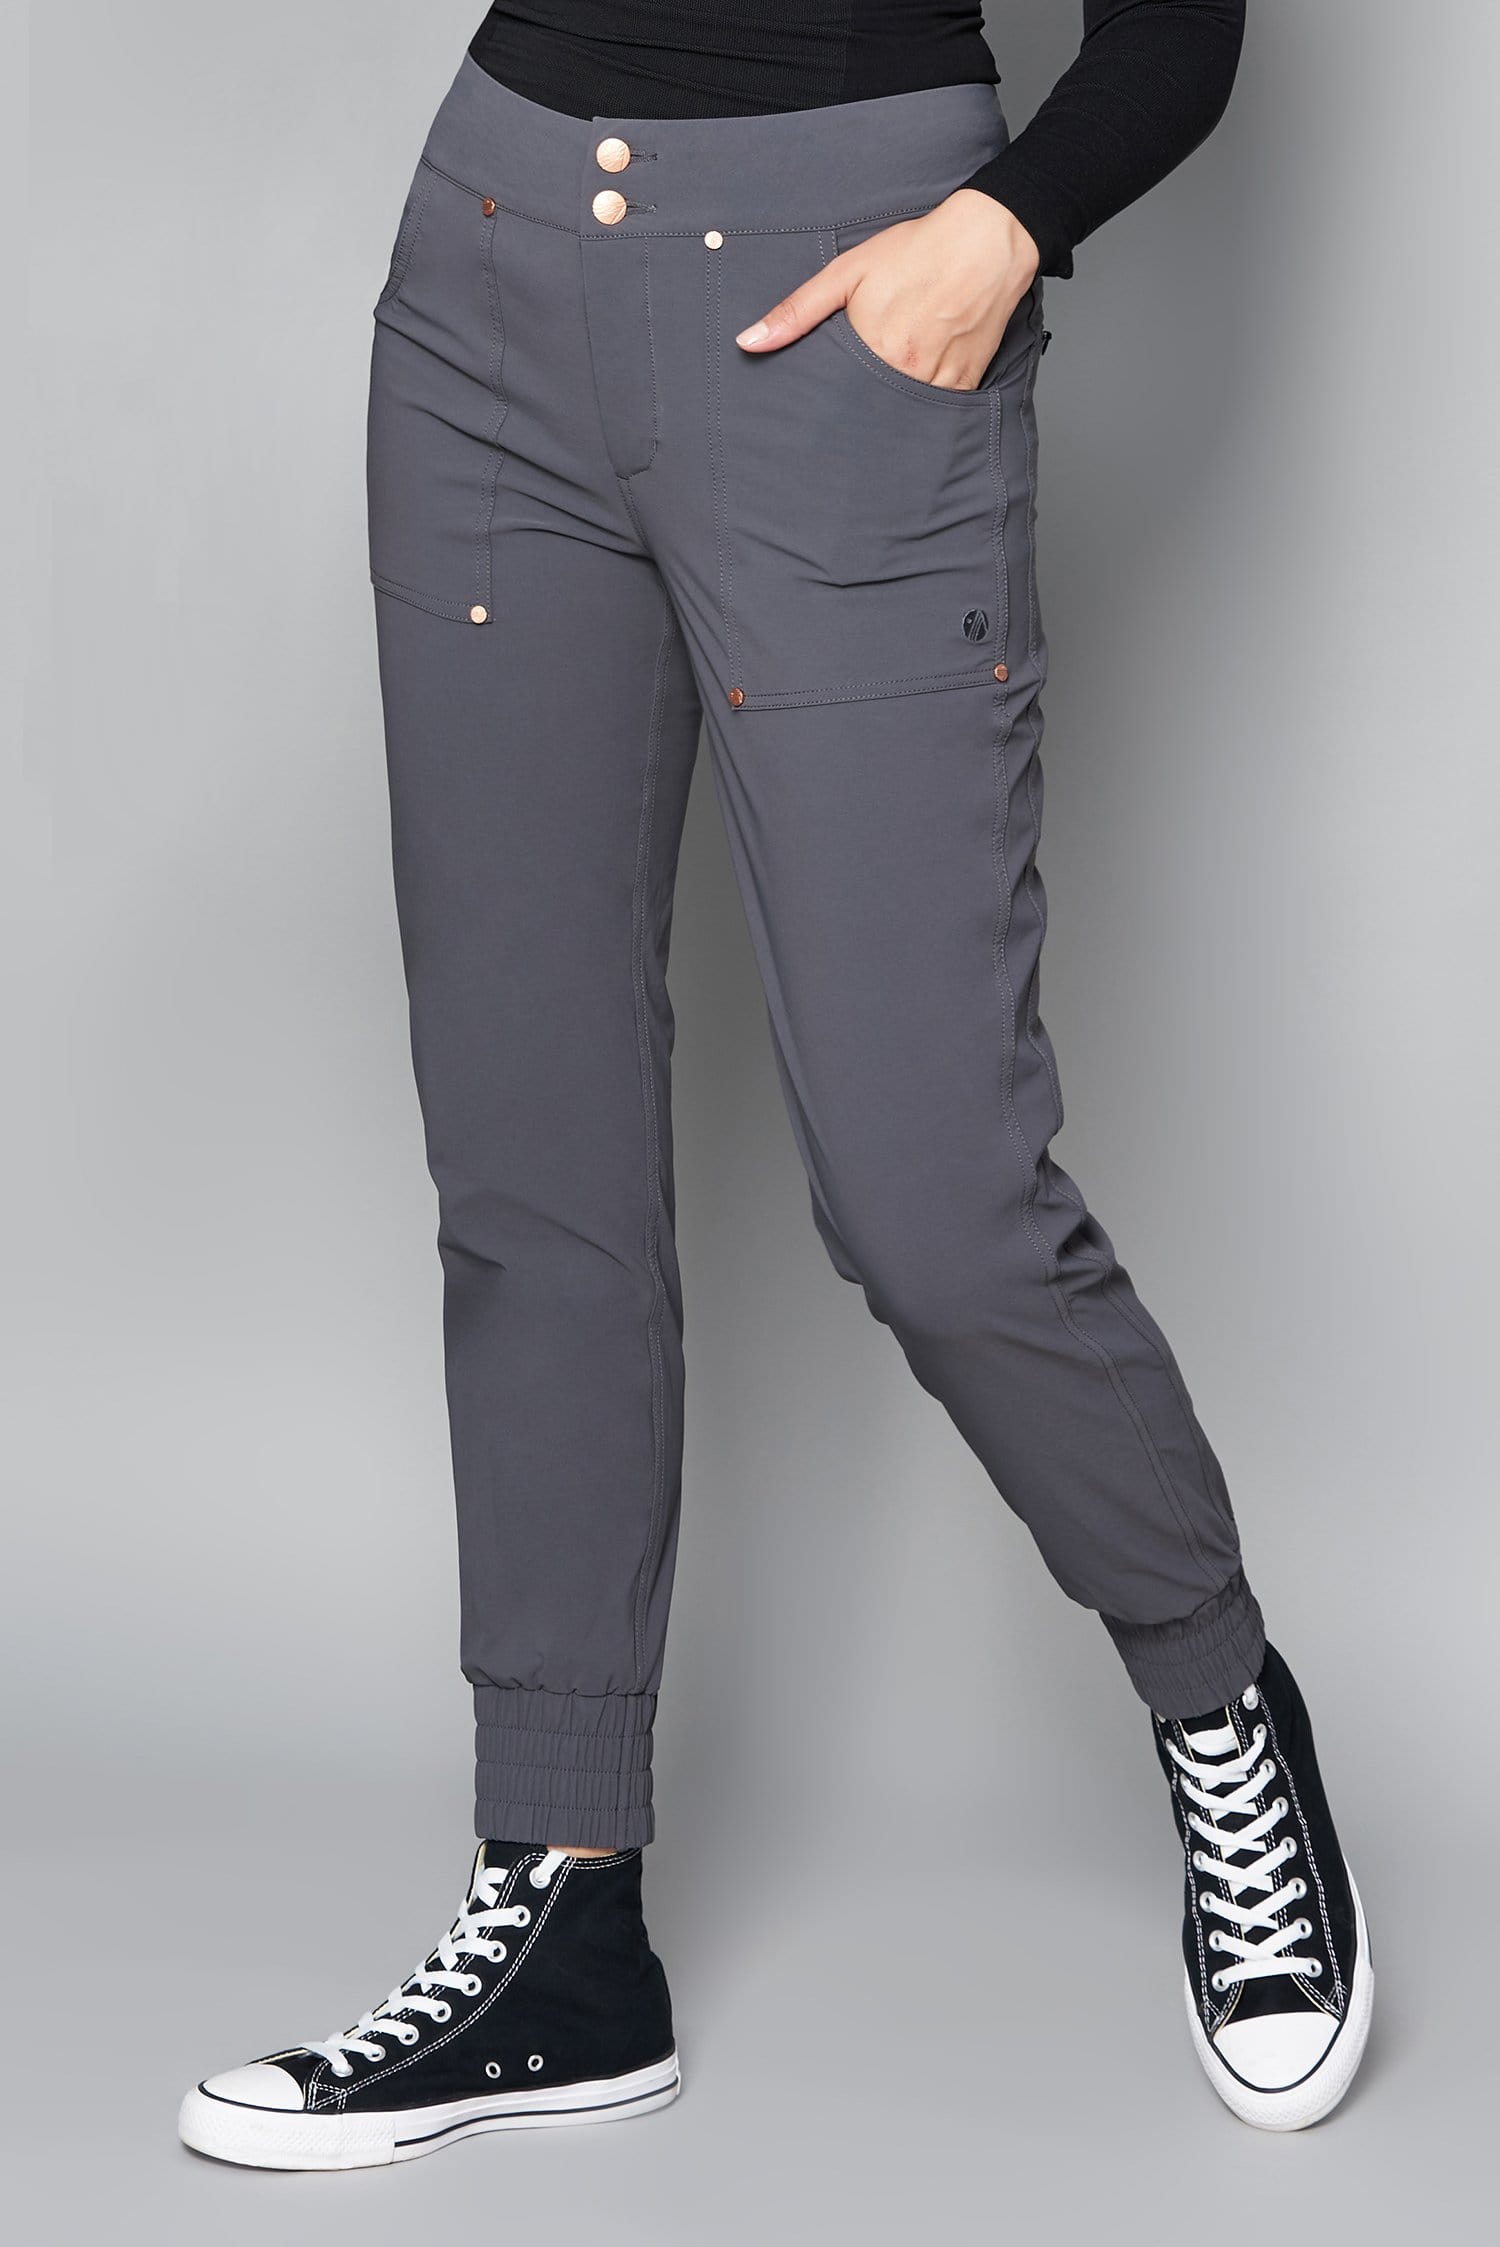 Casual Stroll Pants - Storm Grey - 32r / Uk14 - Womens - Acai Outdoorwear